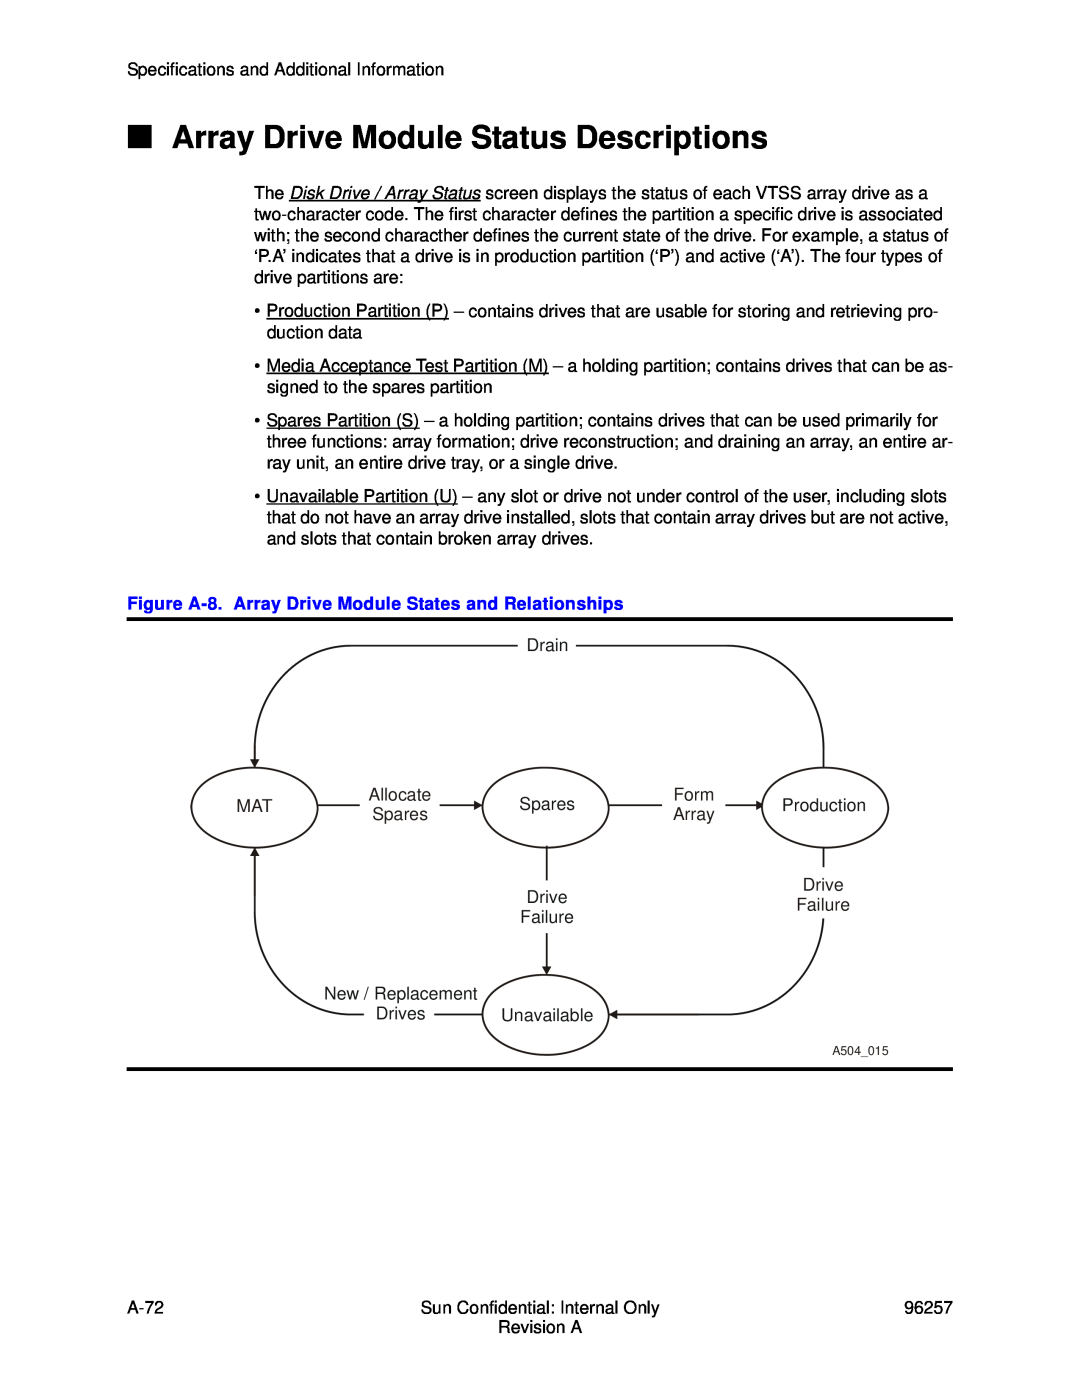 Sun Microsystems 96257 Array Drive Module Status Descriptions, Figure A-8. Array Drive Module States and Relationships 